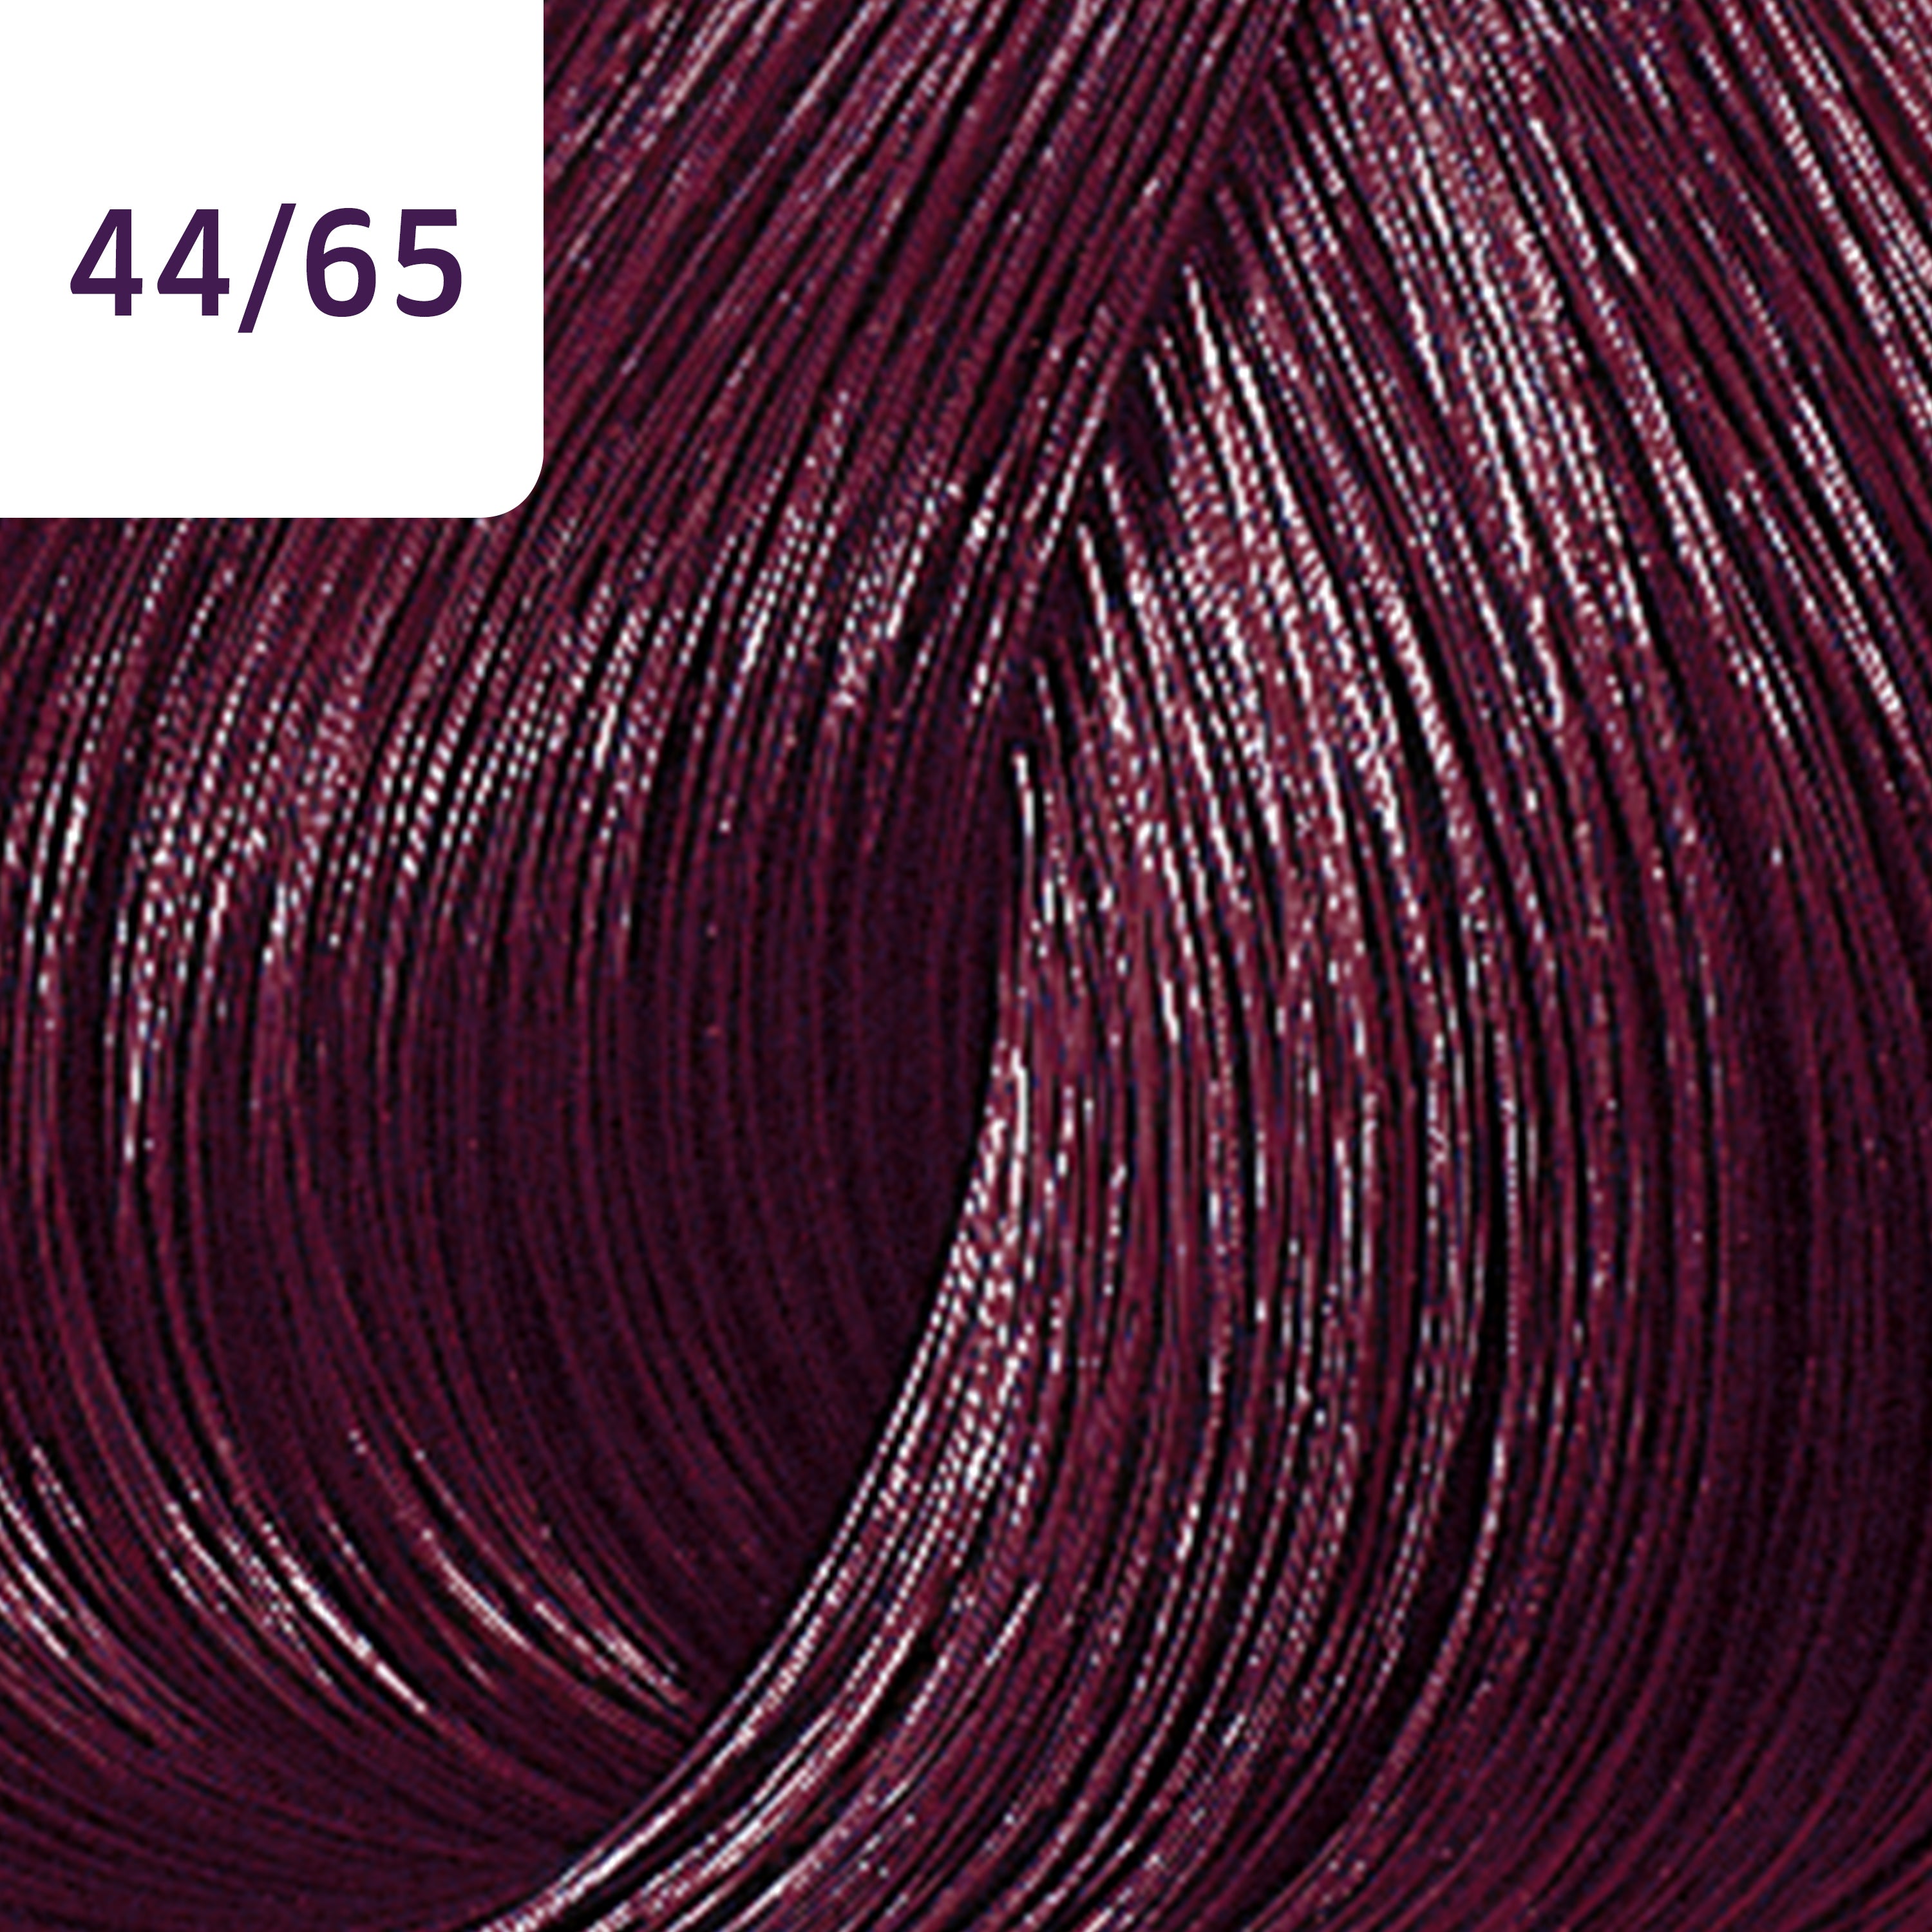 Wella Professional Color Touch Vibrant Reds 44/65 Mediumbrun intensiv violet-mahogni